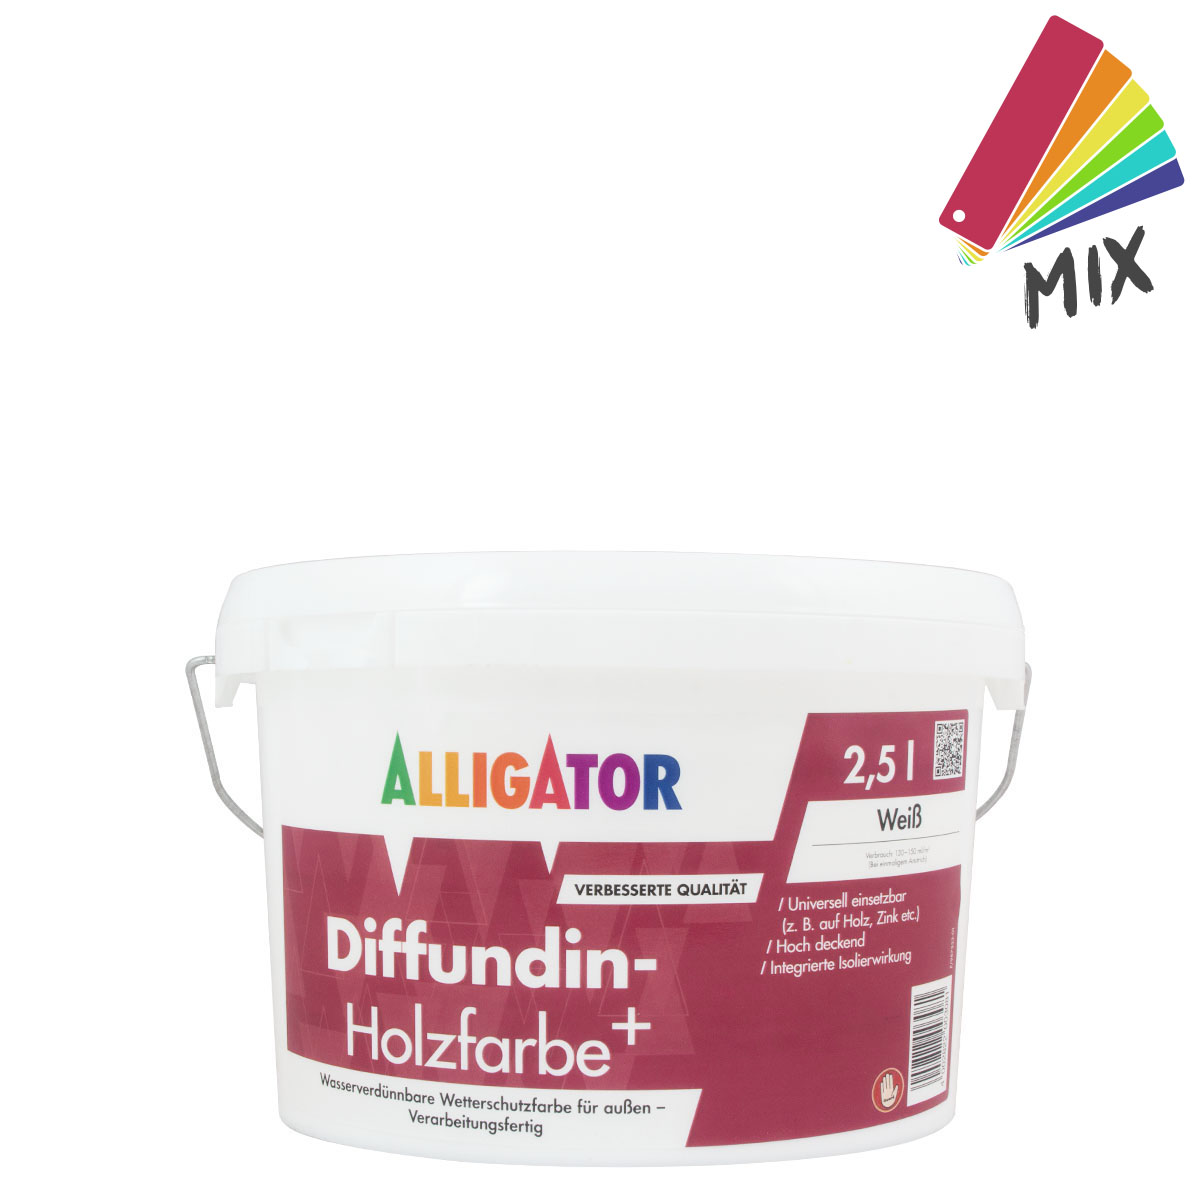 Alligator Diffundin- Holzfarbe+ 2,5L MIX PG S